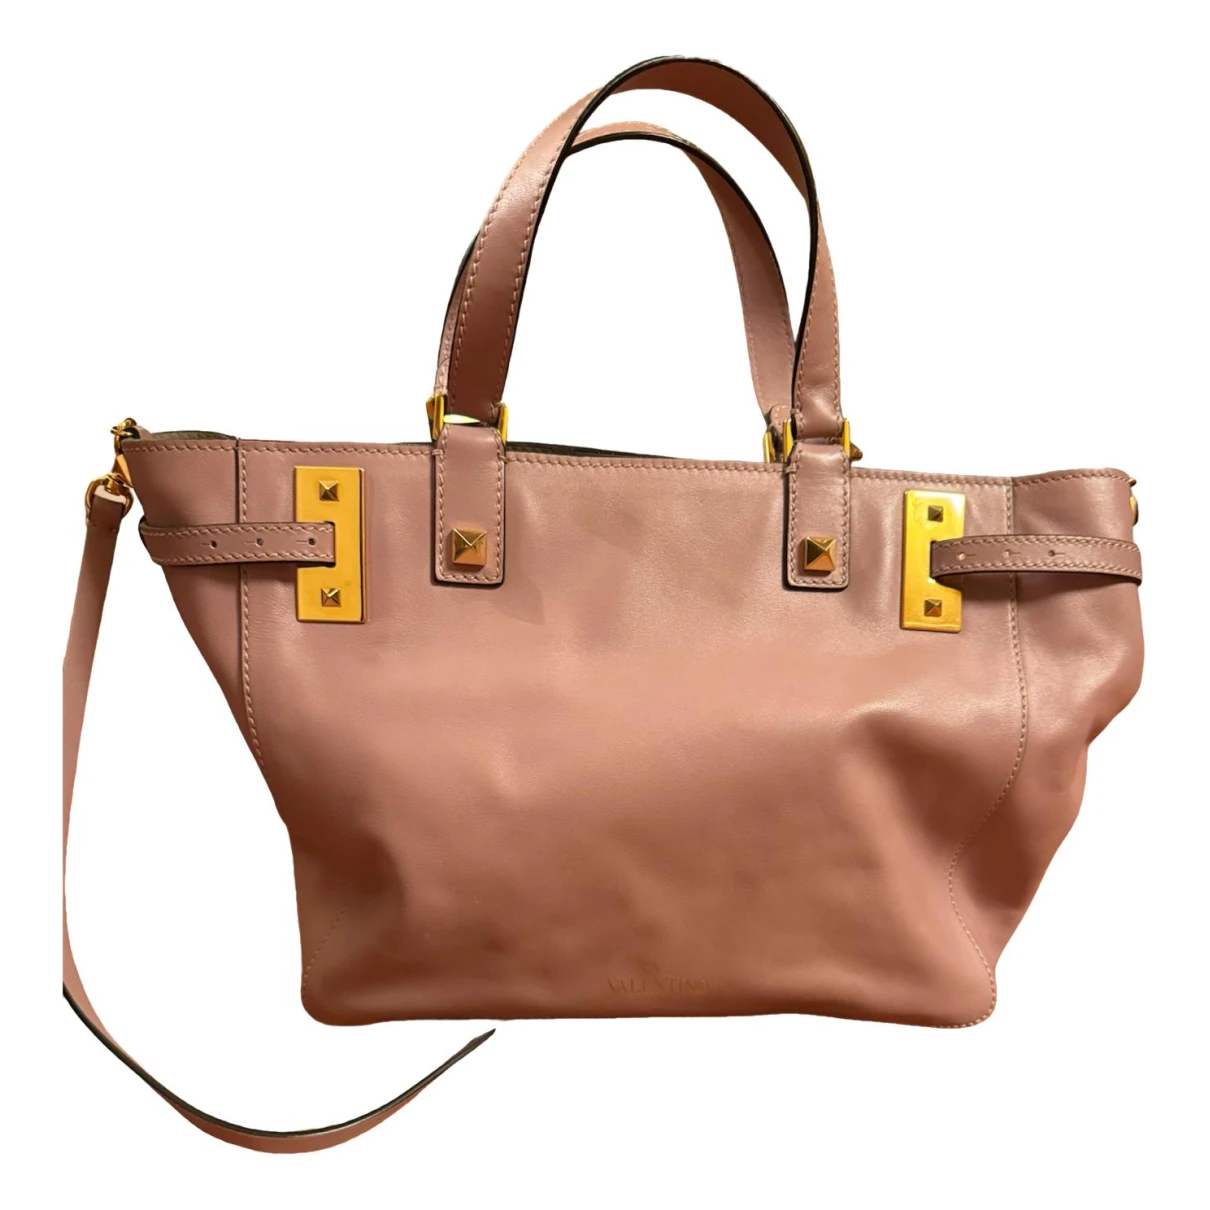 Pre-owned Valentino Garavani Rockstud Leather Handbag In Pink